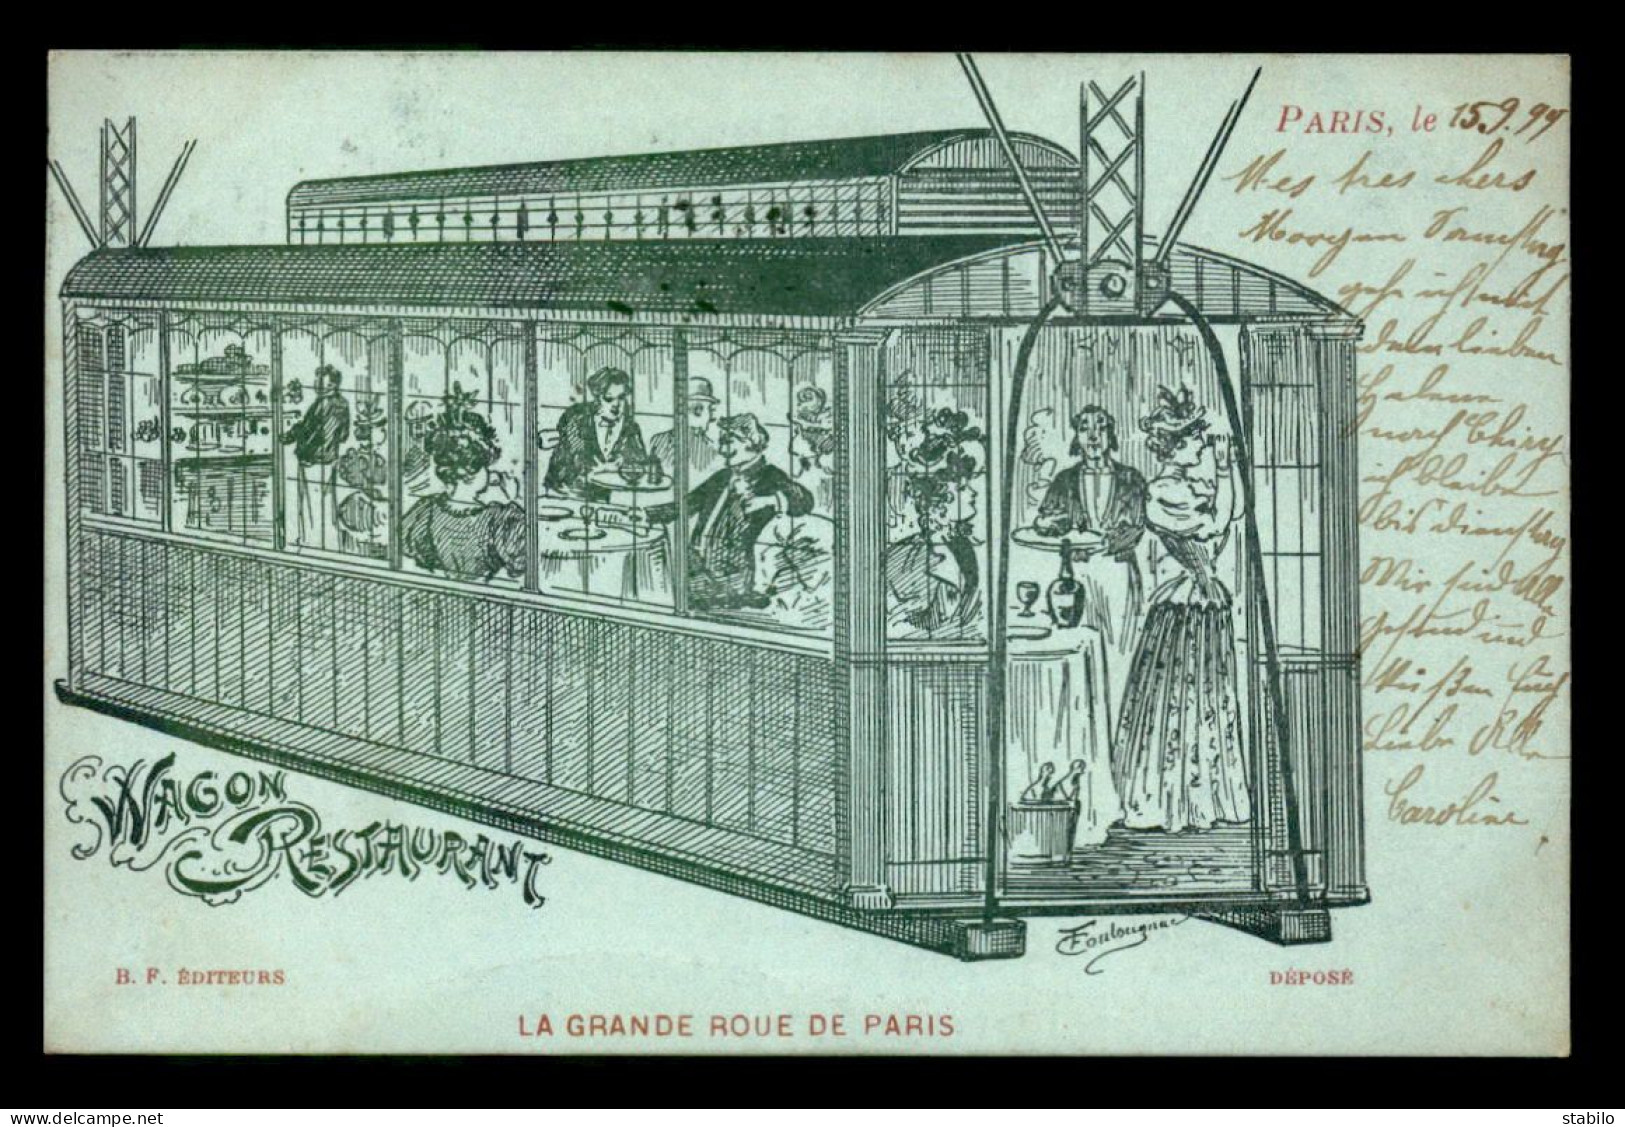 75 - PARIS - ILLUSTRATEURS - LA GRANDE ROUE - WAGON-RESTAURANT - CARTE VOYAGE EN 1899 - Andere Monumenten, Gebouwen